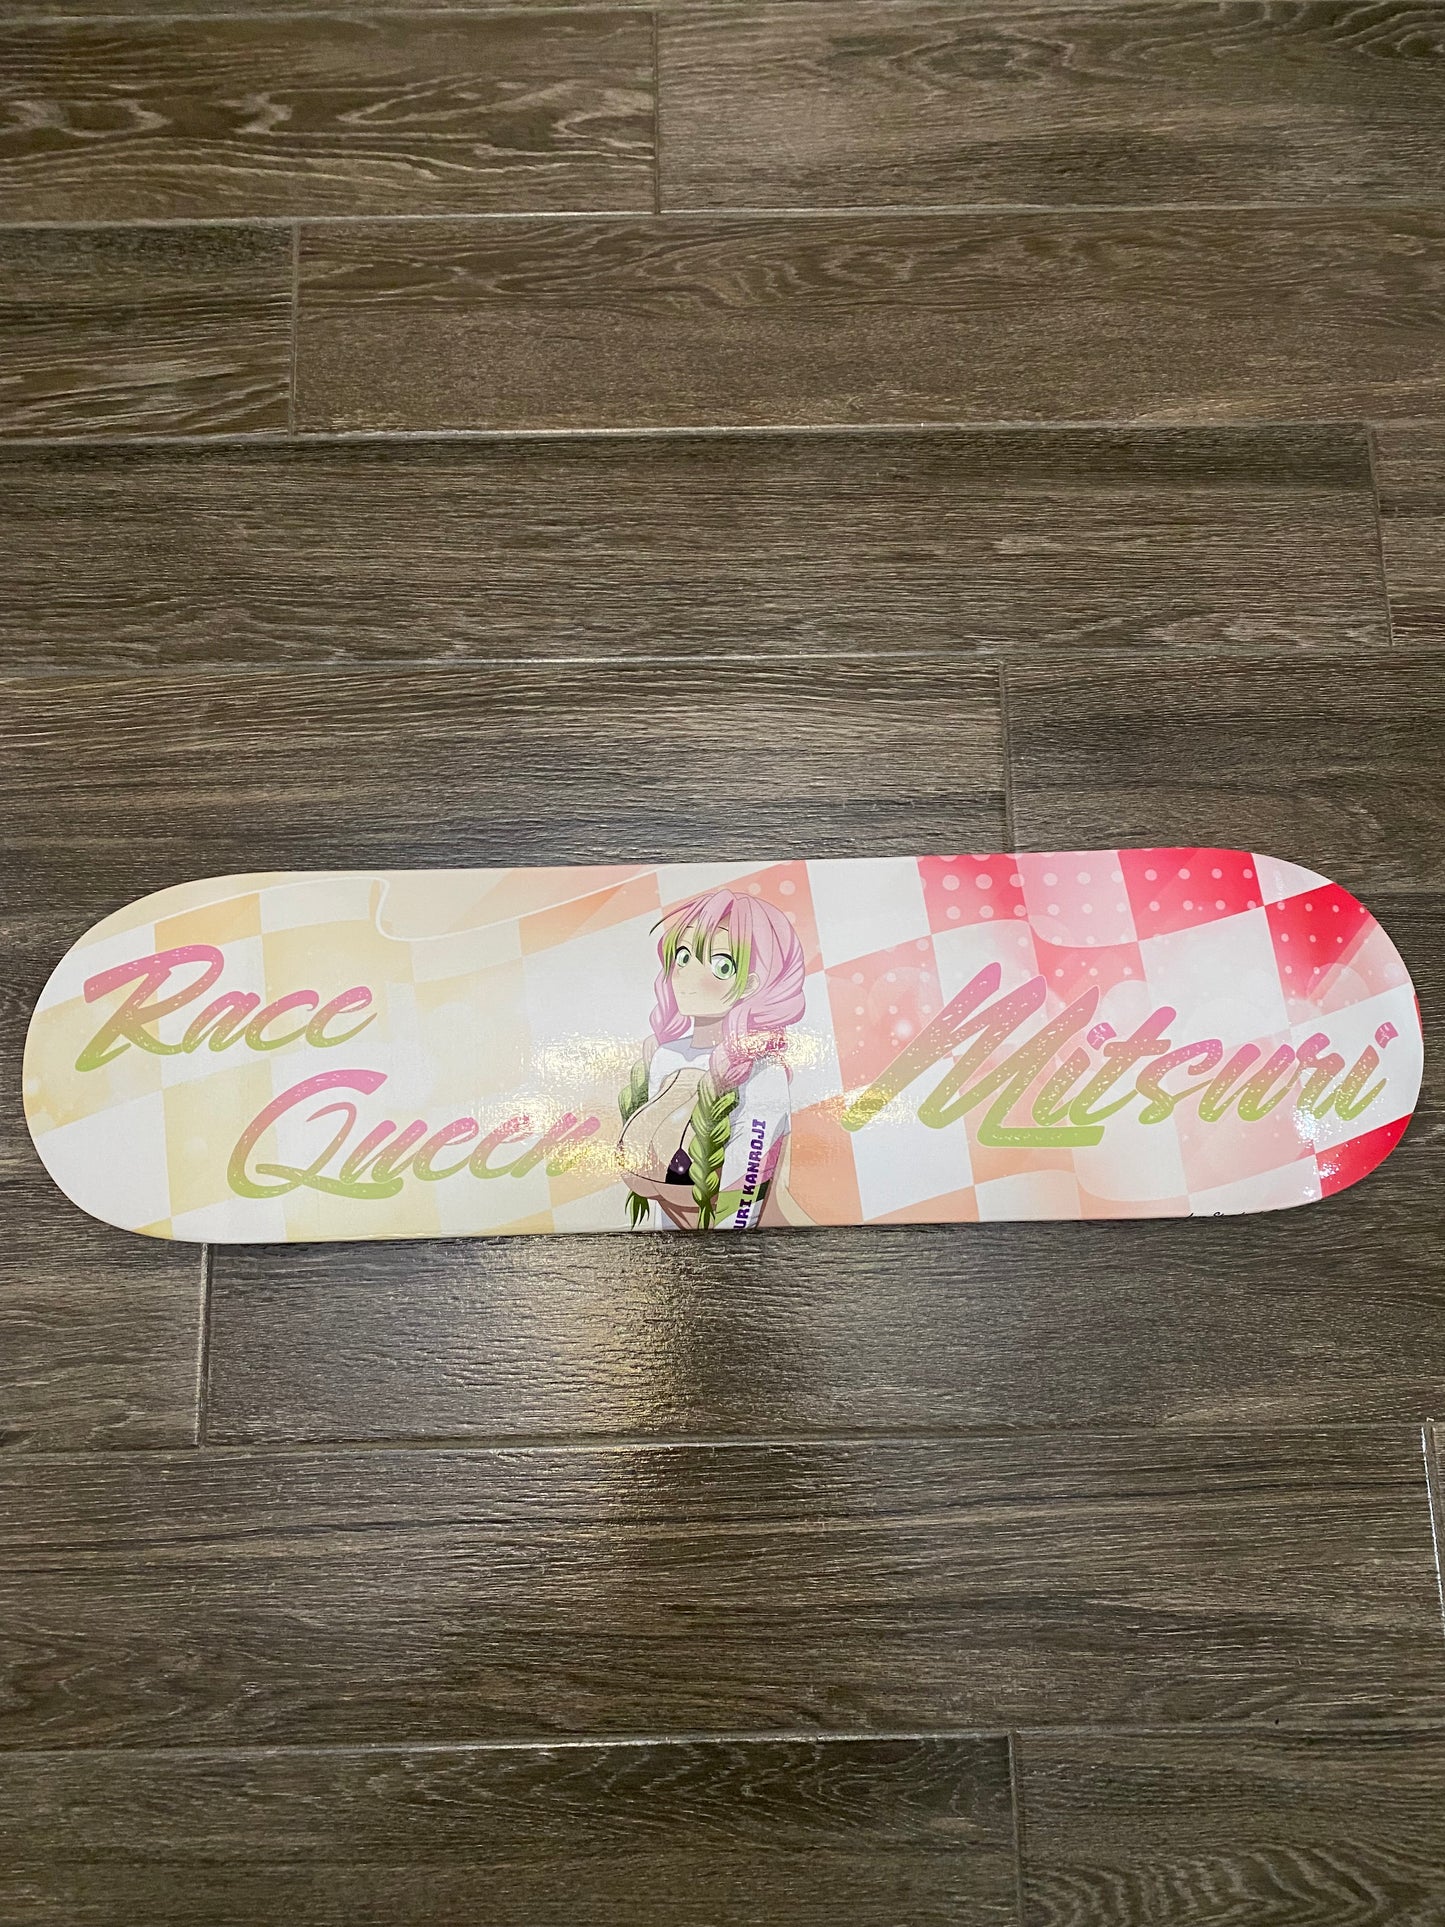 Race Queen Mitsuri Skate Deck